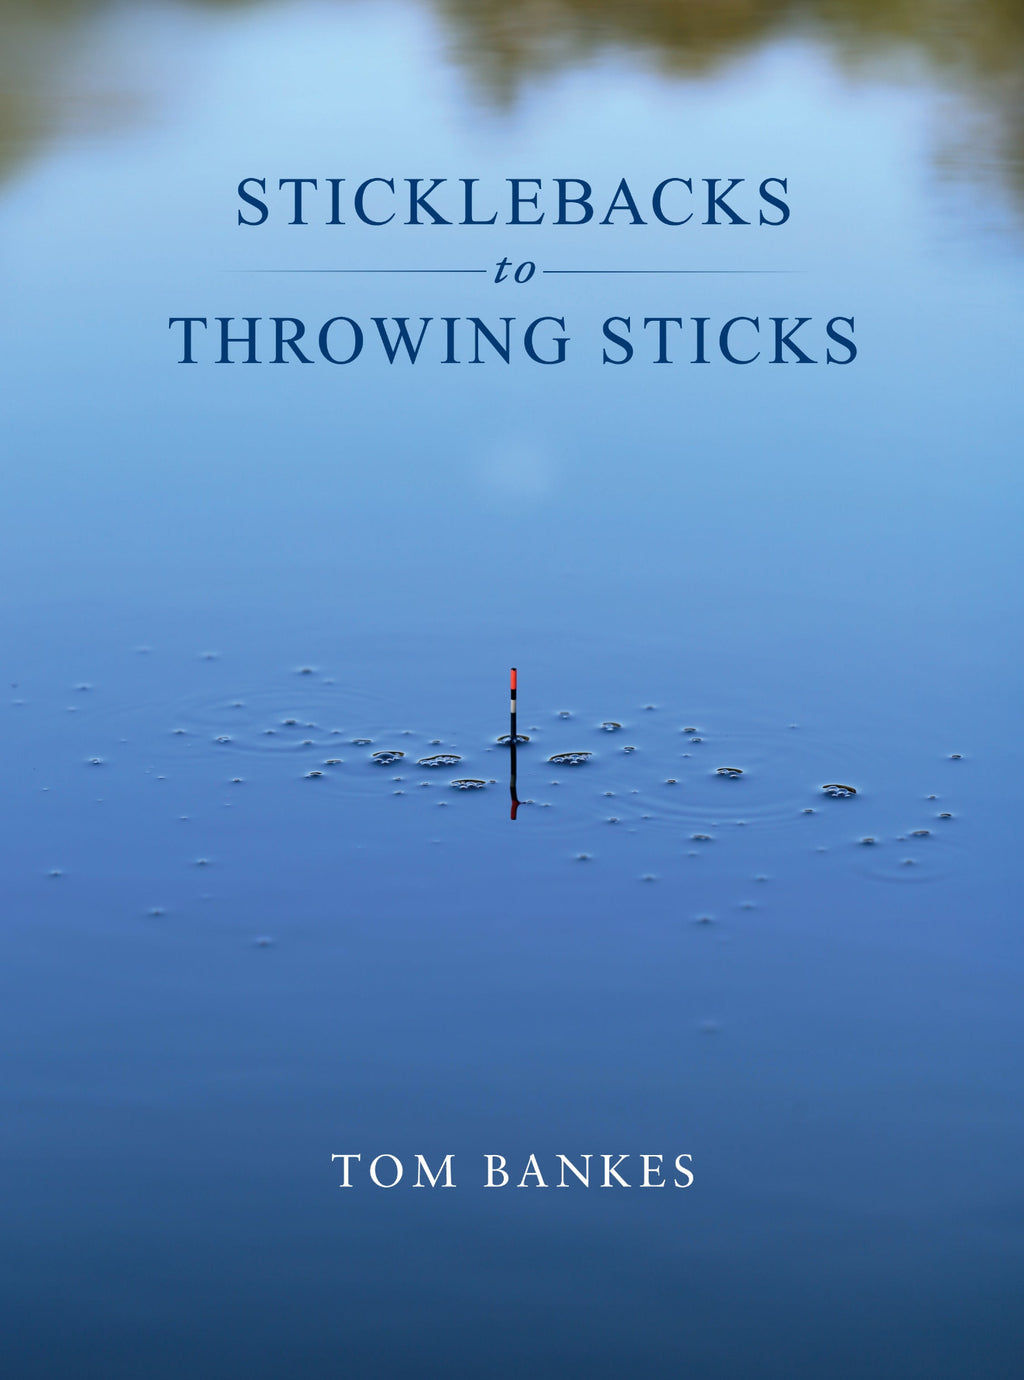 Sticklebacks To Throwing Sticks by Tom Bankes